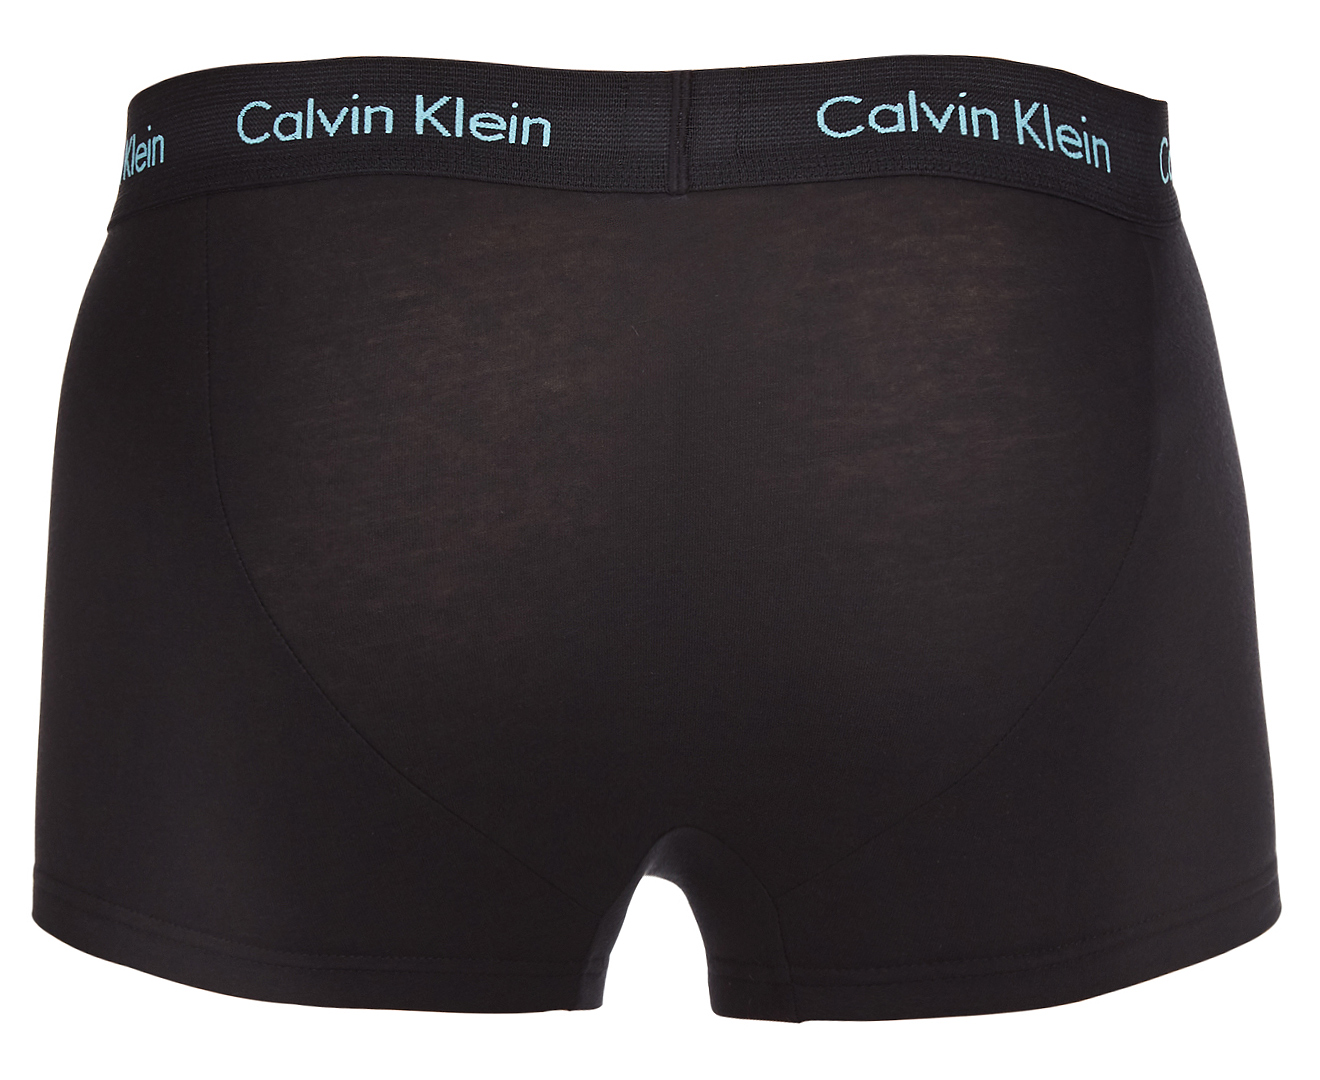 Calvin Klein Men's Cotton Stretch Low Rise Trunk 3-Pack - Black/Multi ...